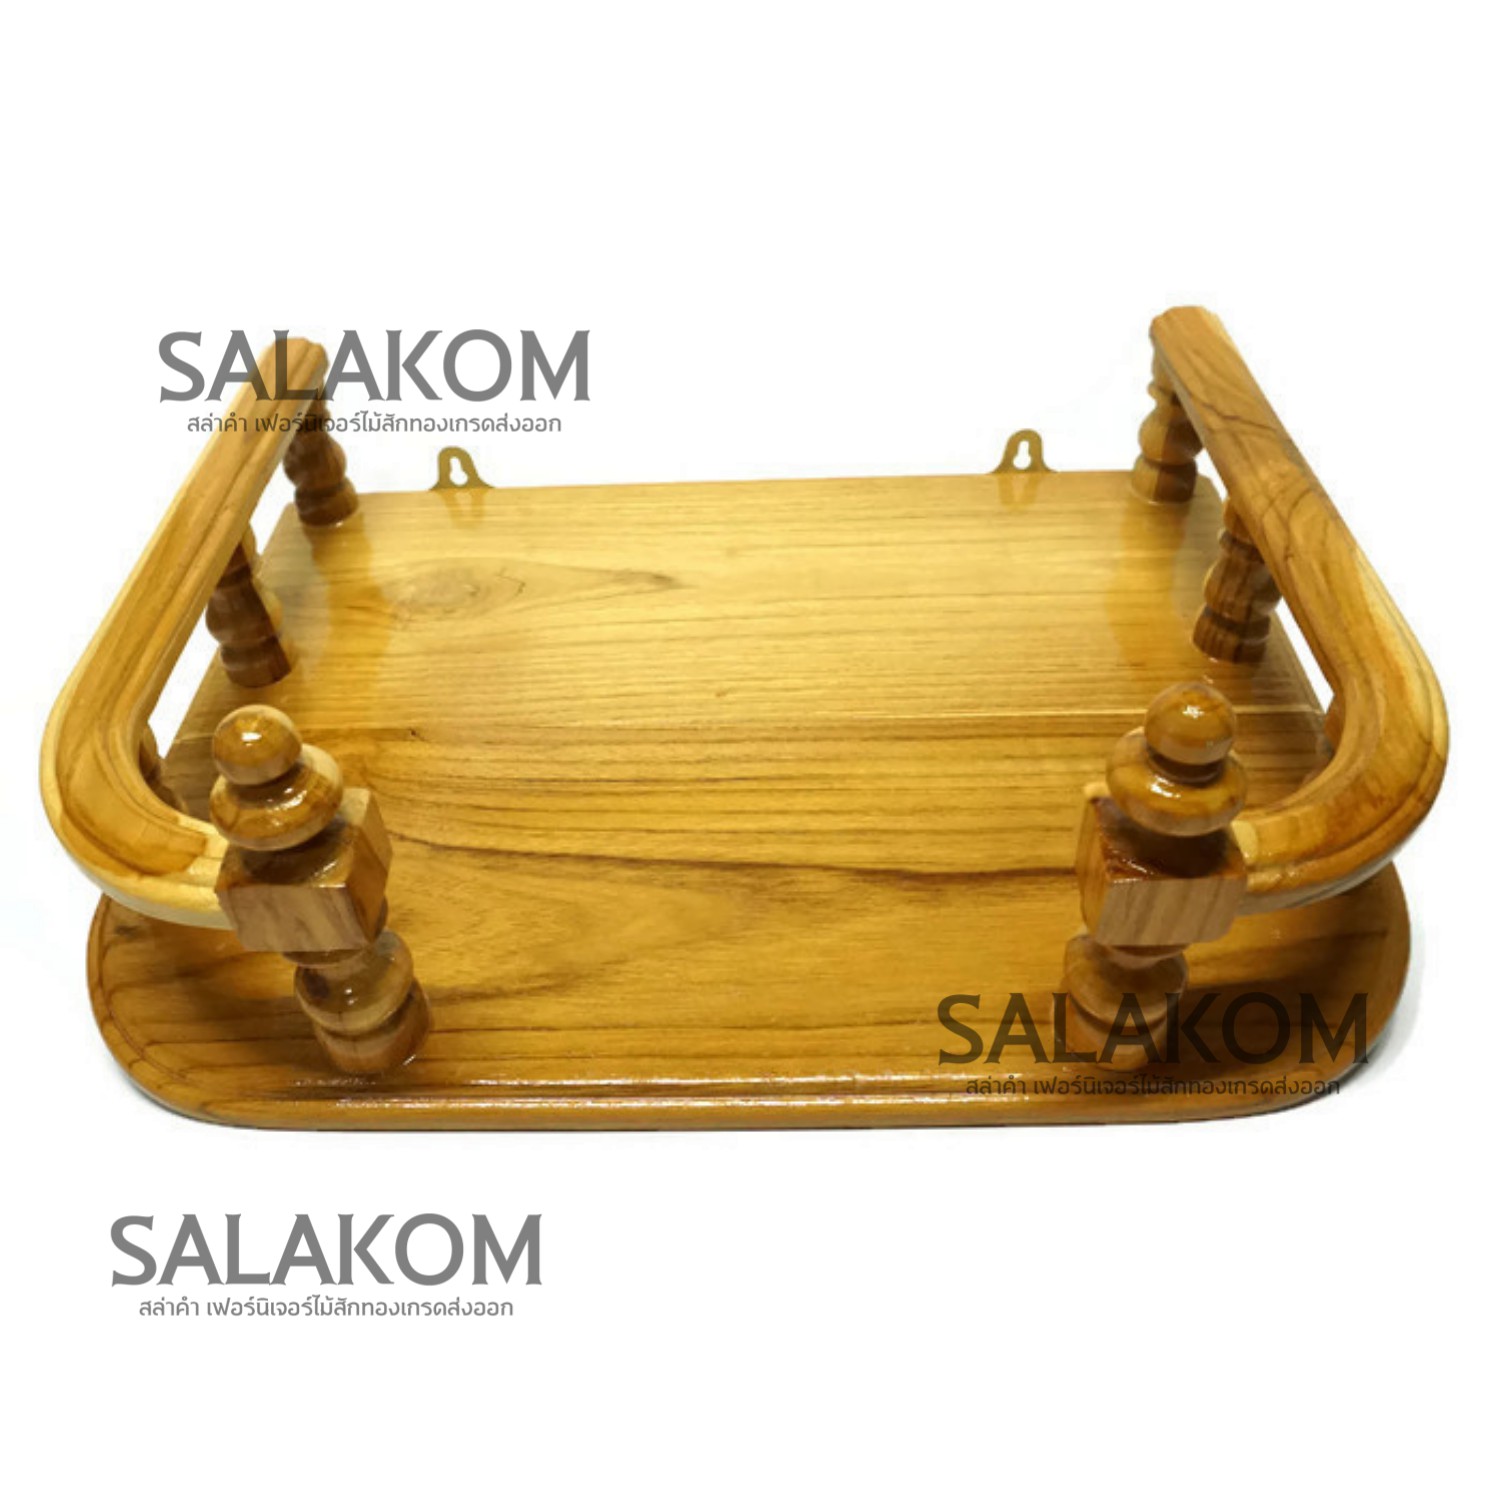 Salakom หิ้งวางพระ ติดผนัง ไม้สักแท้ ขนาด 40*29 เซนต์. สีเคลือบ โชว์ลายไม้สวยงาม หิ้งพระไม้สักแขวนผนัง Buddha's shelf